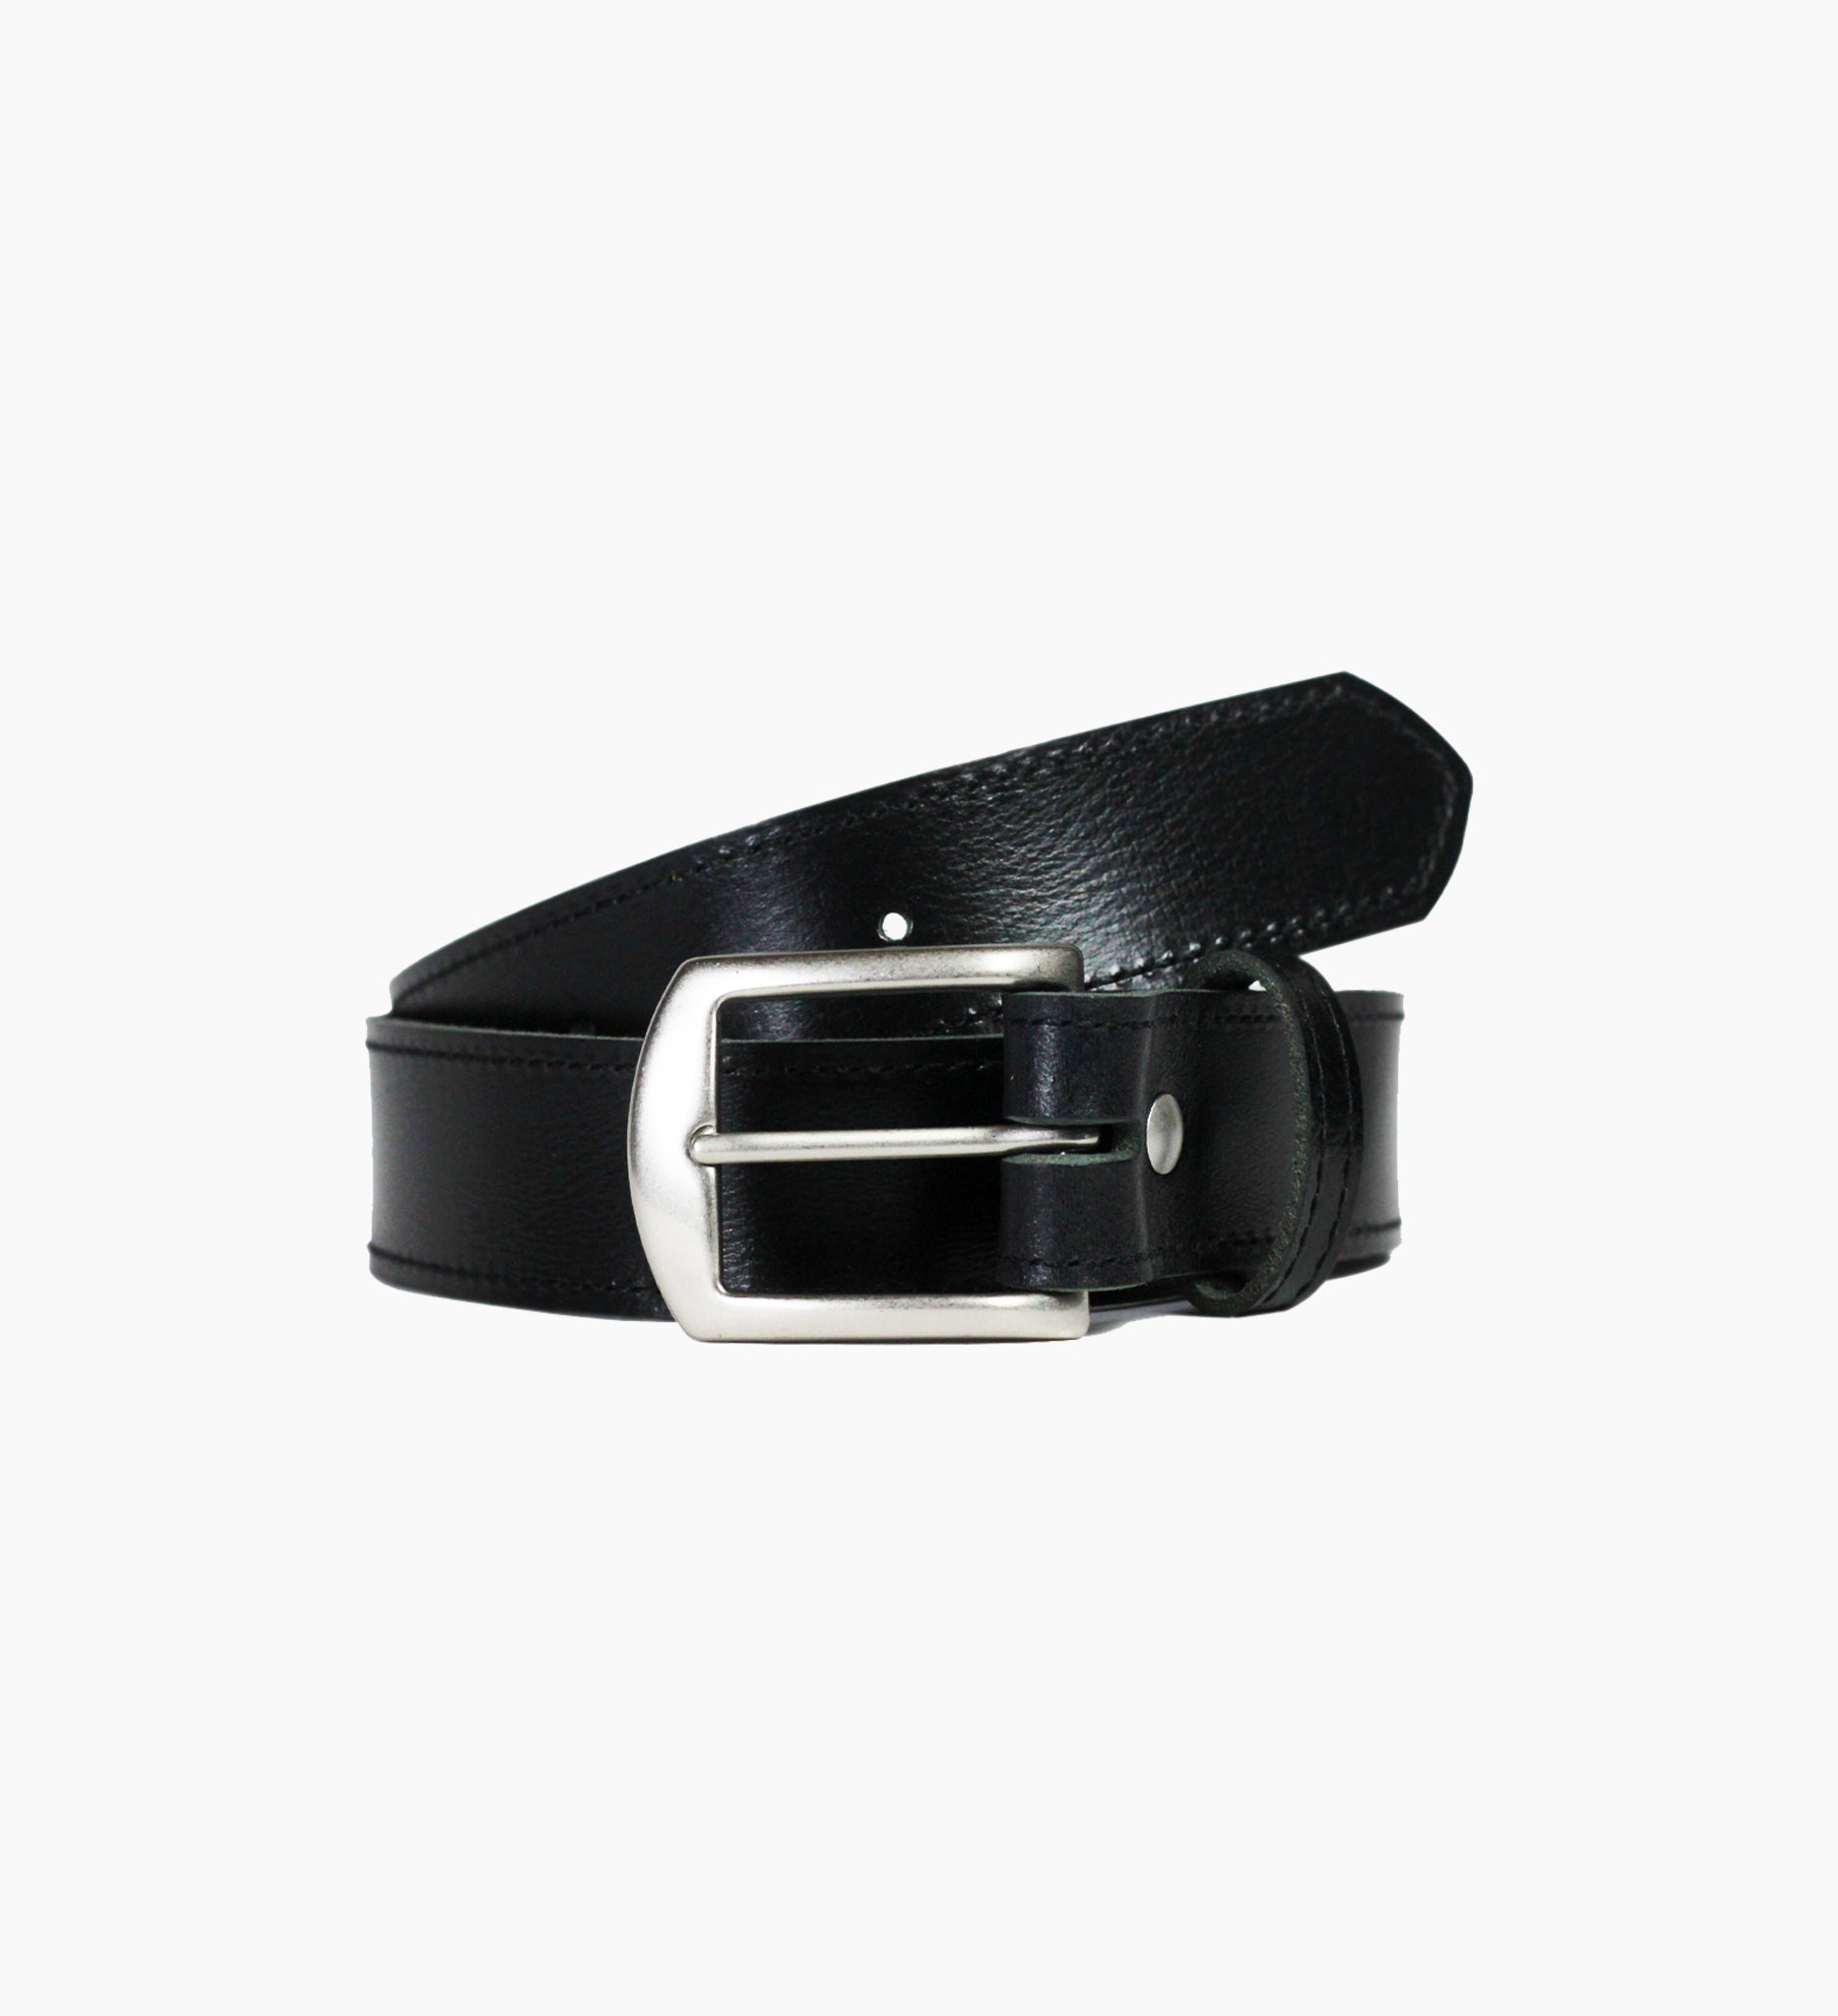 USA Made Leather Belt 